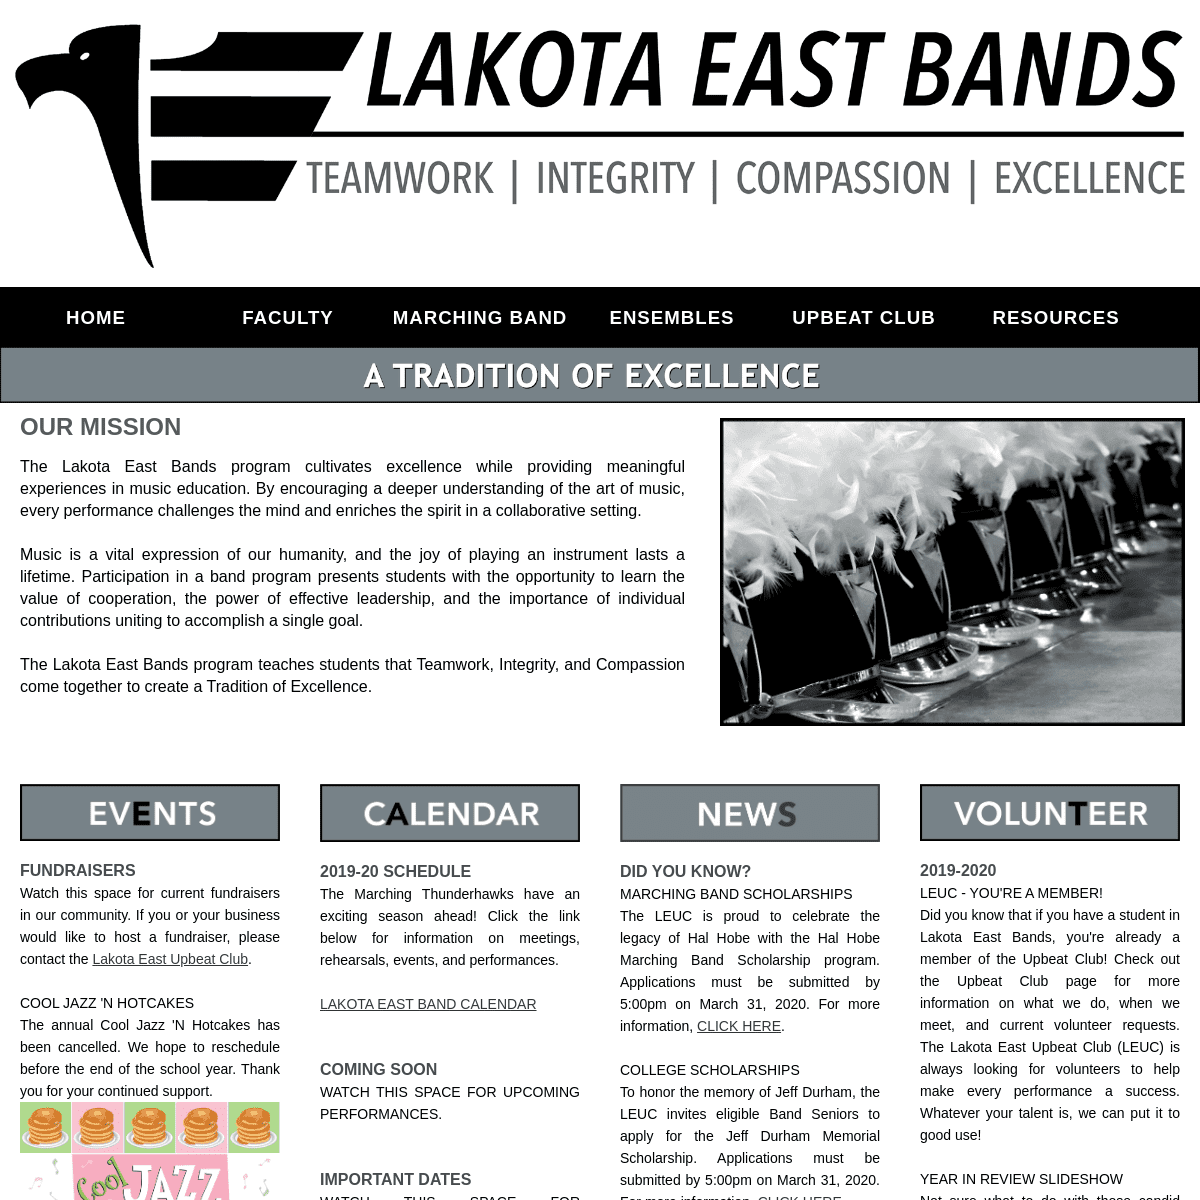 A complete backup of lakotaeastbands.org